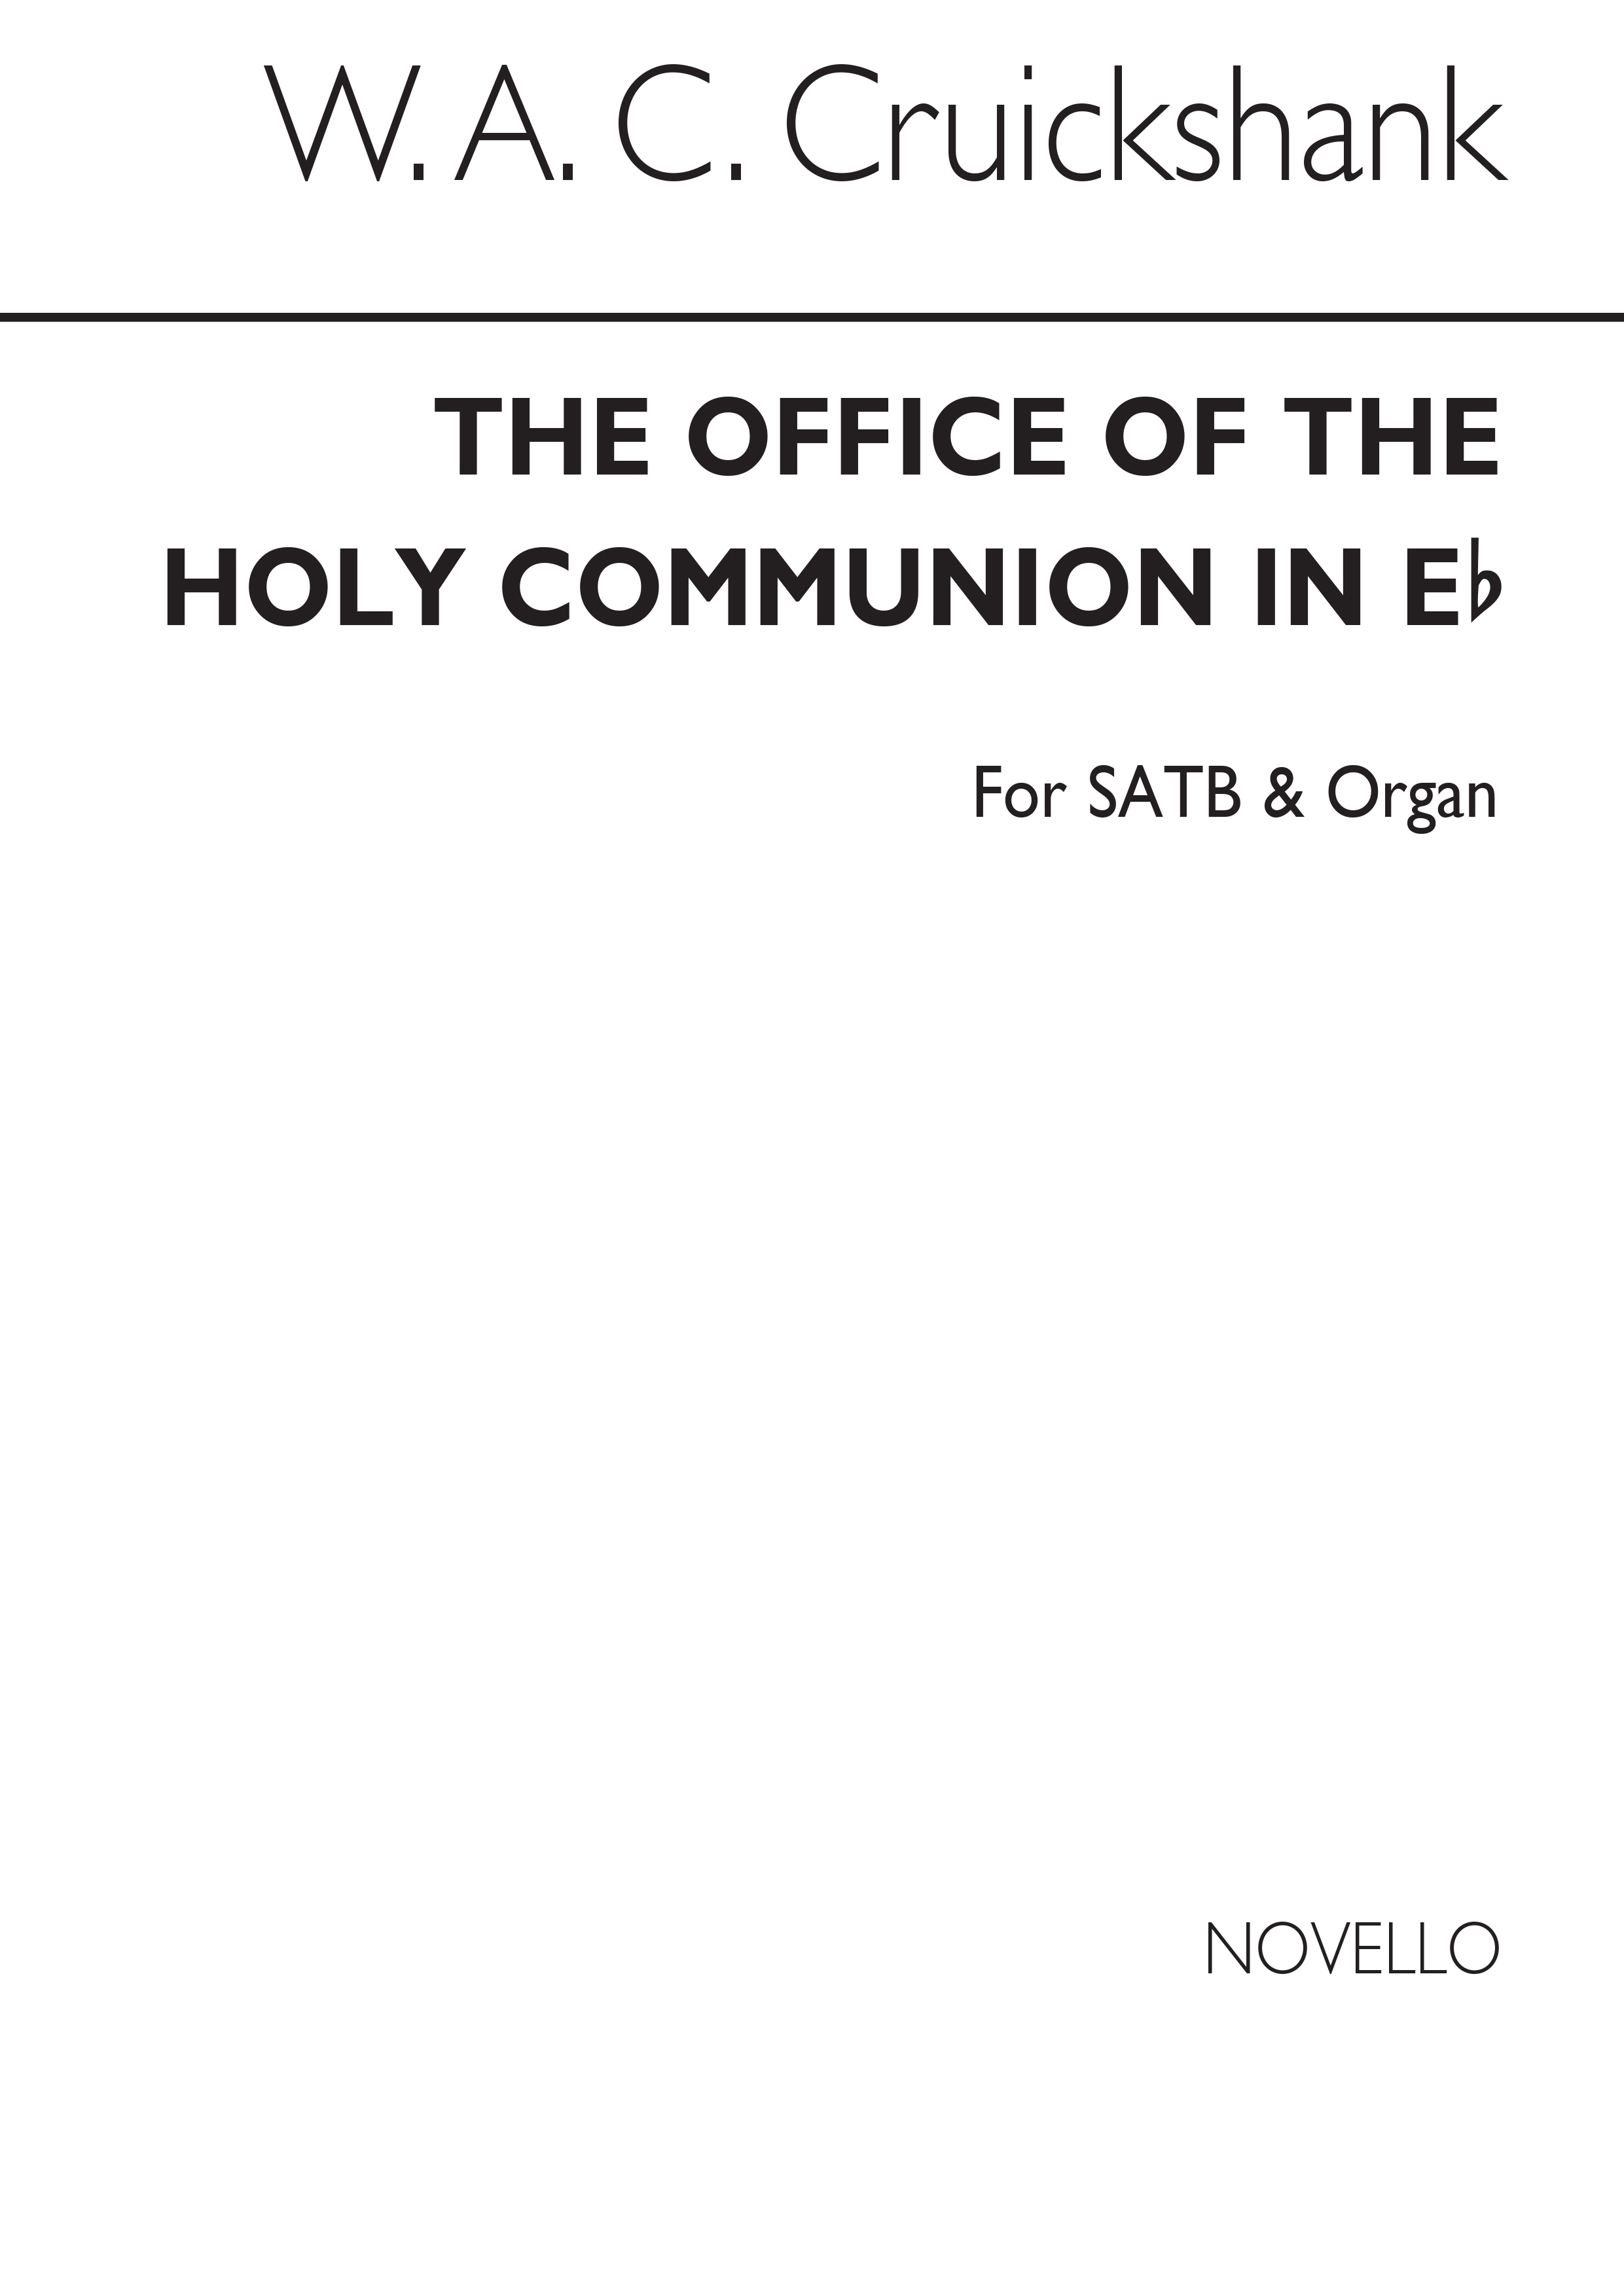 W.A.C. Cruickshank: Holy Communion Service In E Flat SATB/Organ